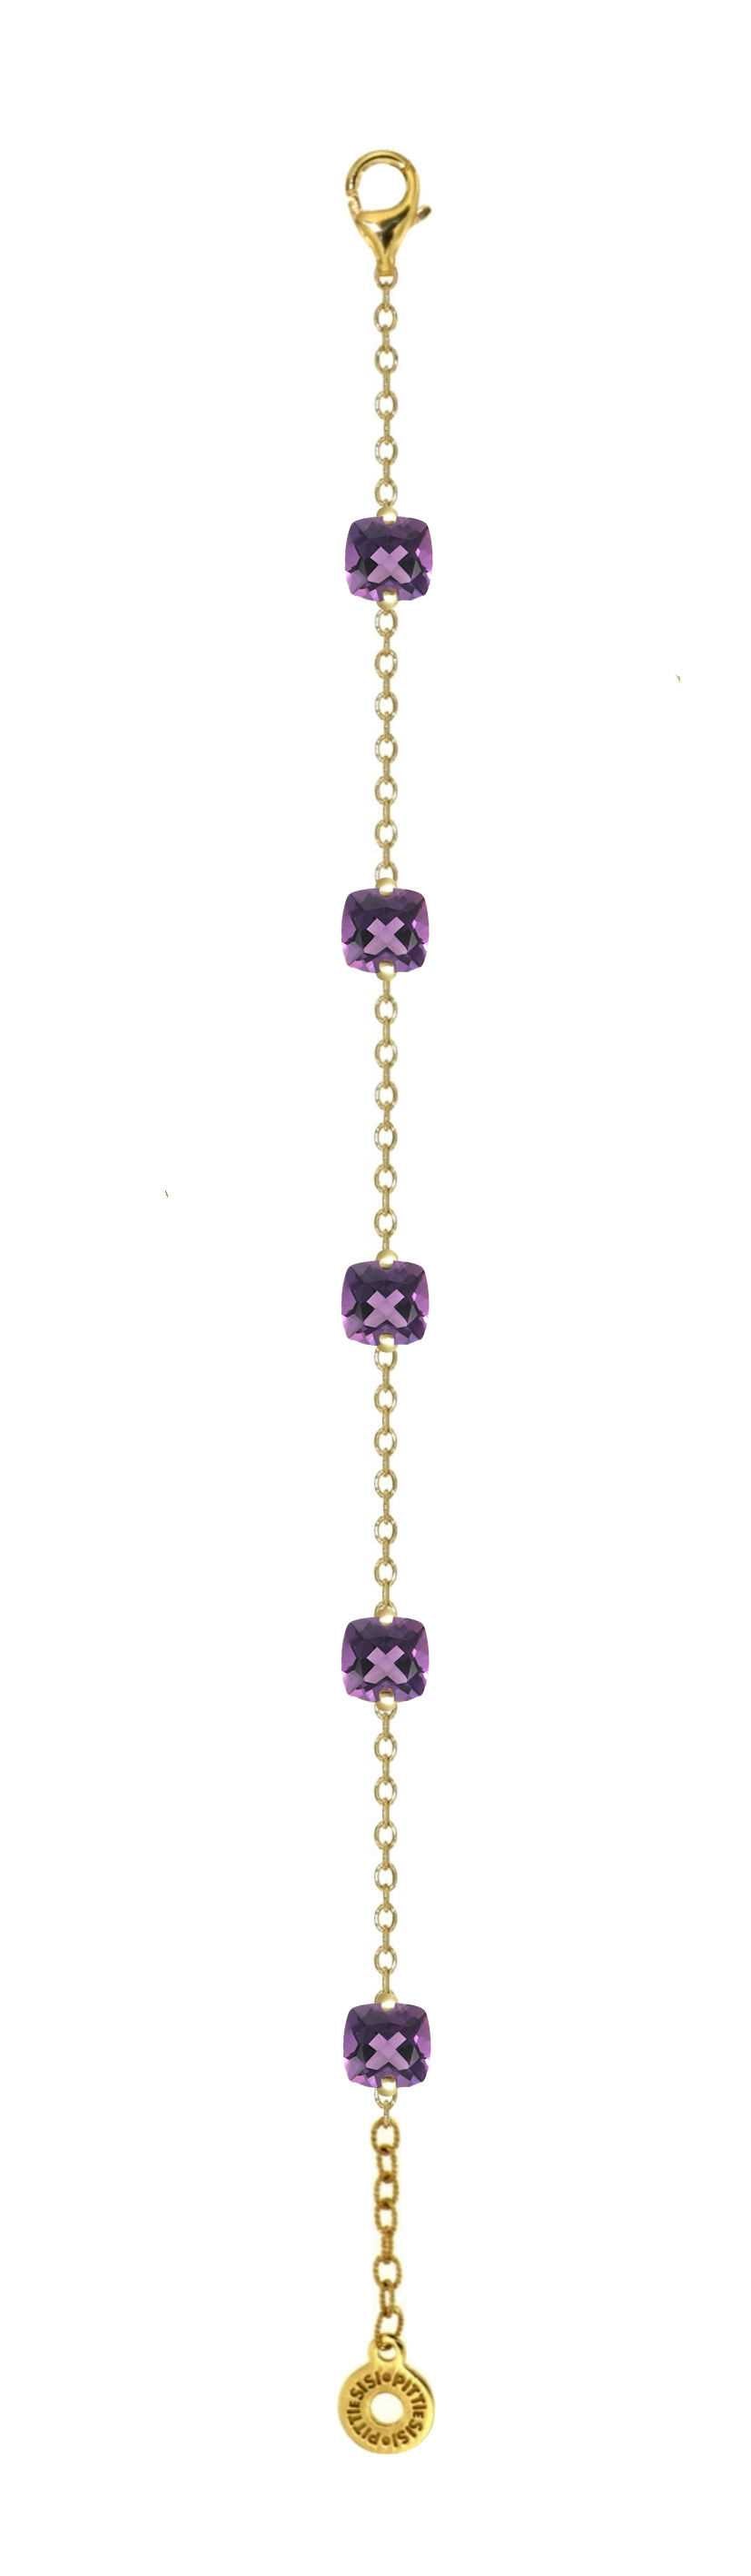 Pitti and Sisi Rainbow Bracelet 925 Silver Finish PVD Yellow Gold Purple Quartz BR 9590G/086